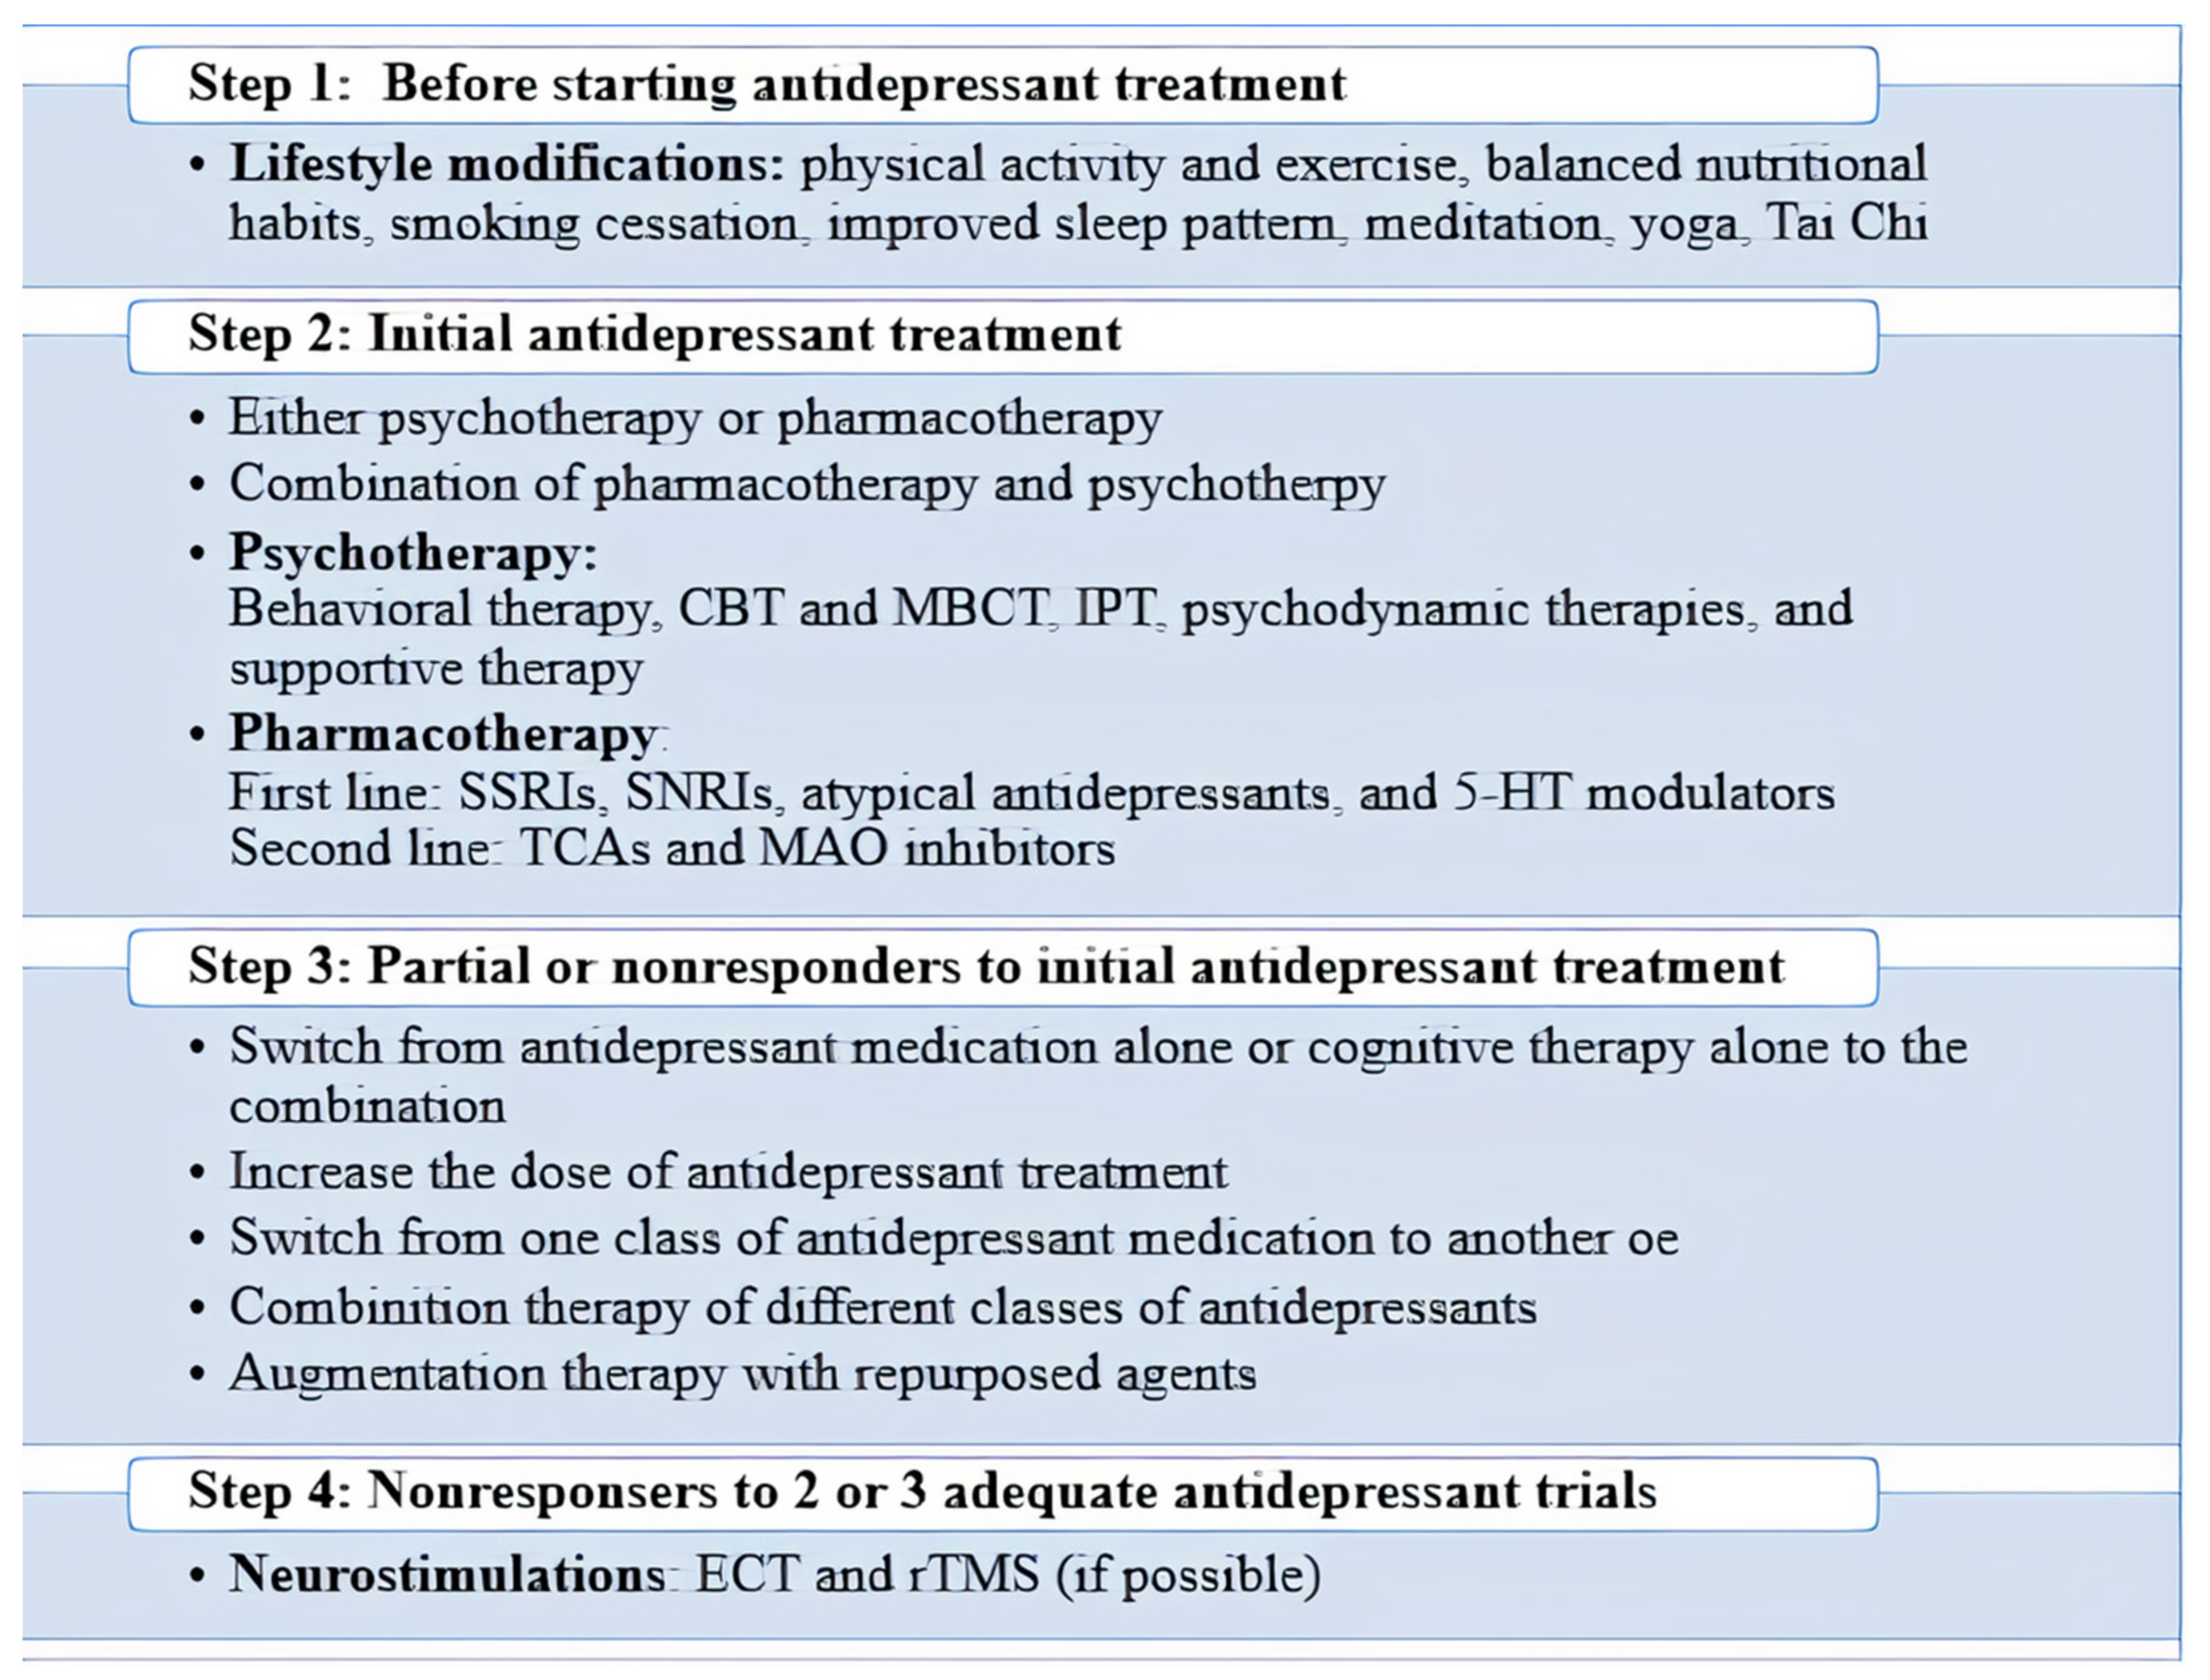 Polygenic heterogeneity in antidepressant treatment and placebo response